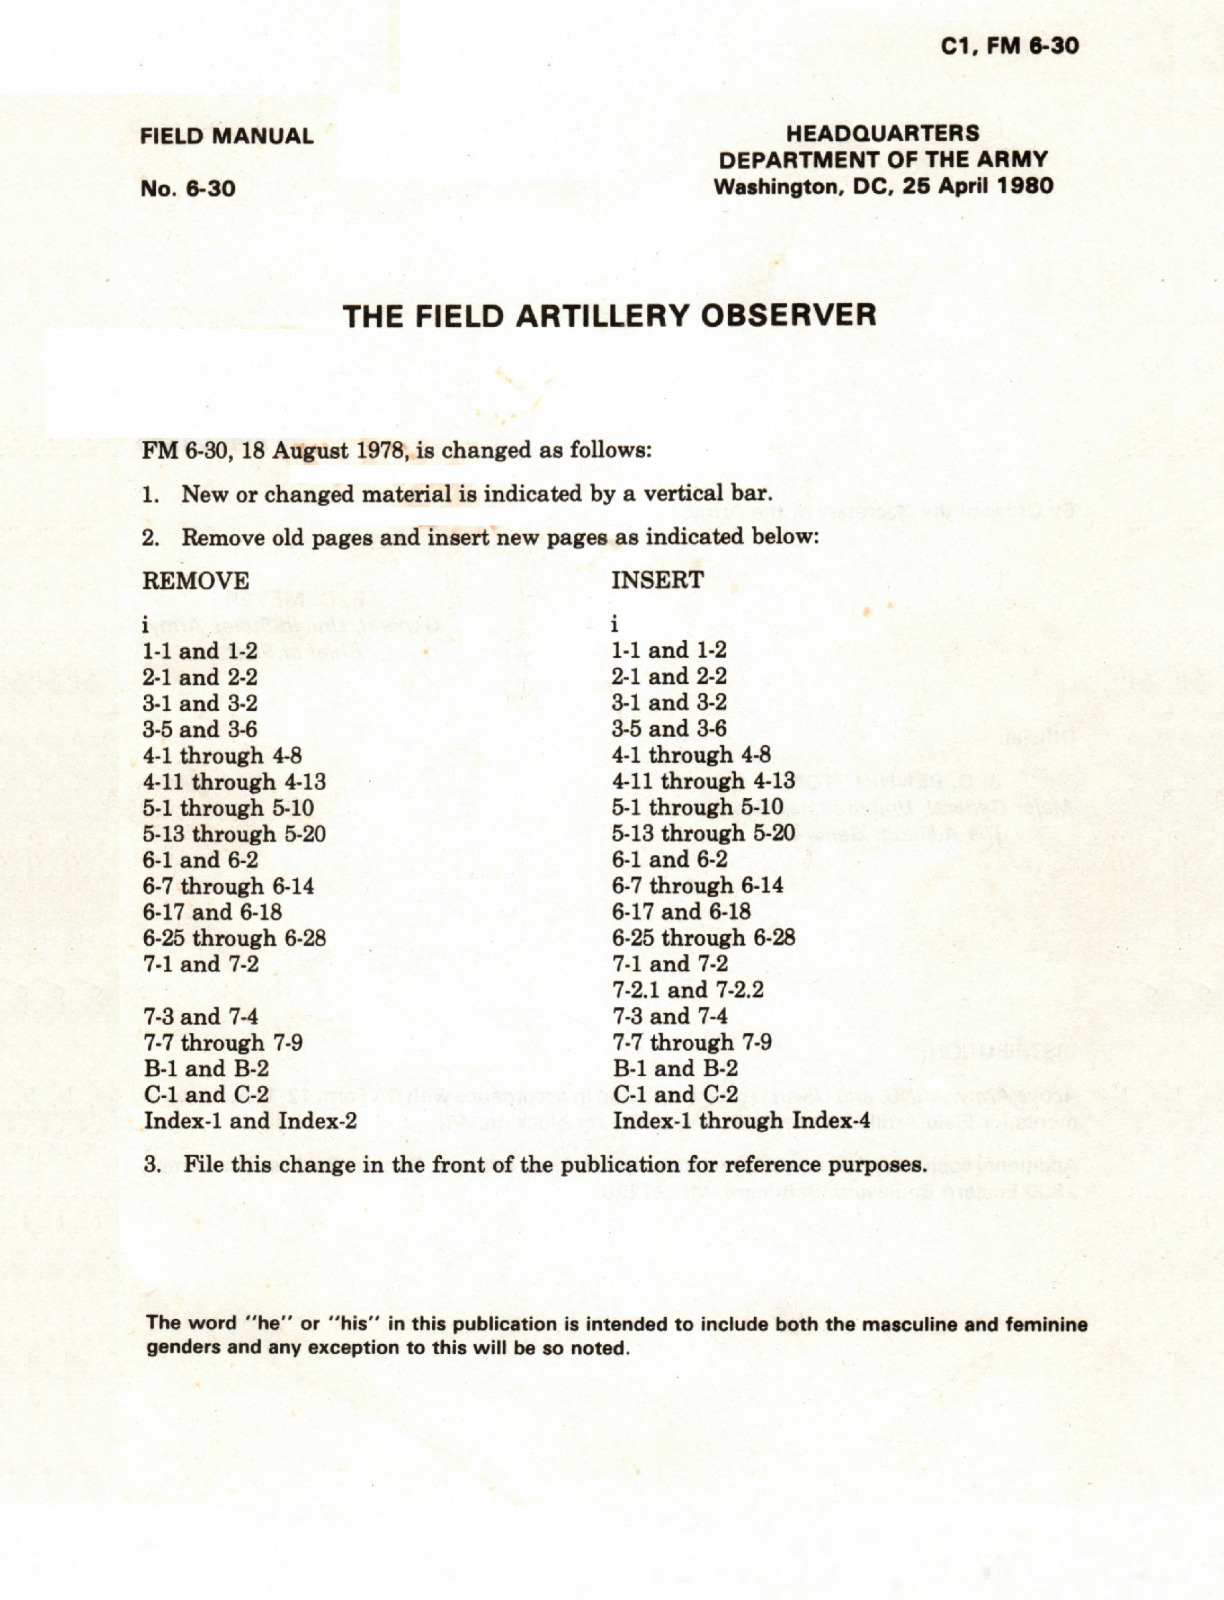 76 Page FM 6-30 Change 1 - April 1980 THE FIELD ARTILLERY OBSERVER on Data CD